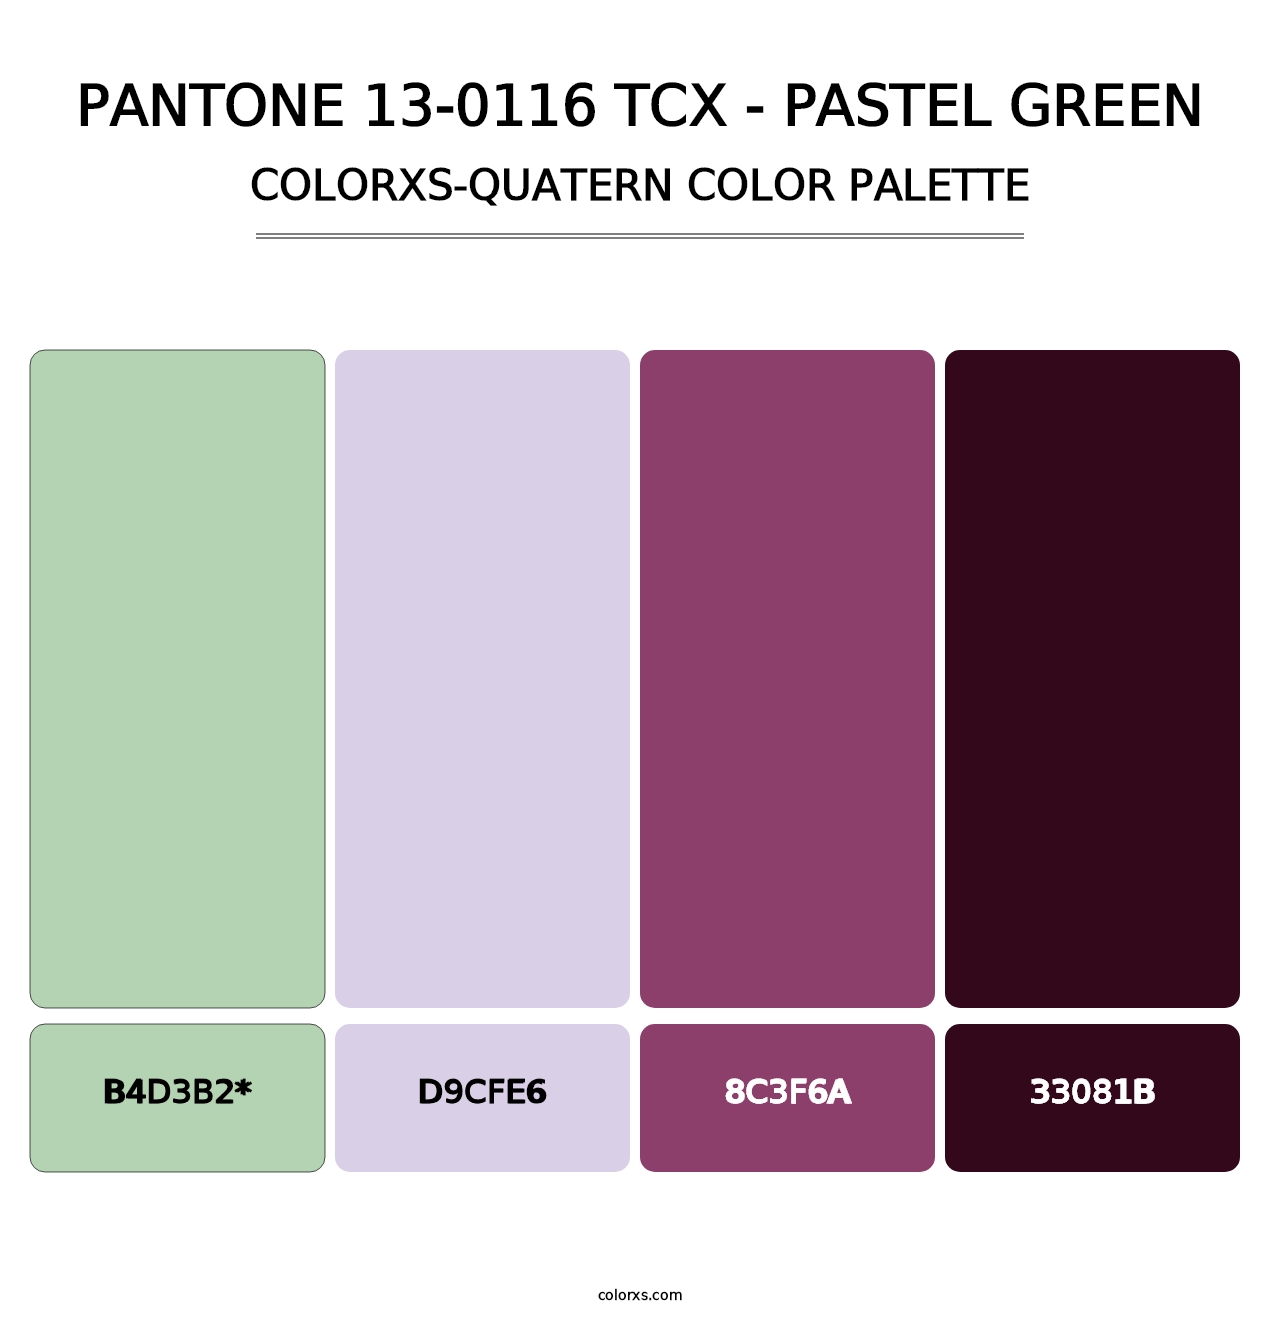 PANTONE 13-0116 TCX - Pastel Green - Colorxs Quatern Palette